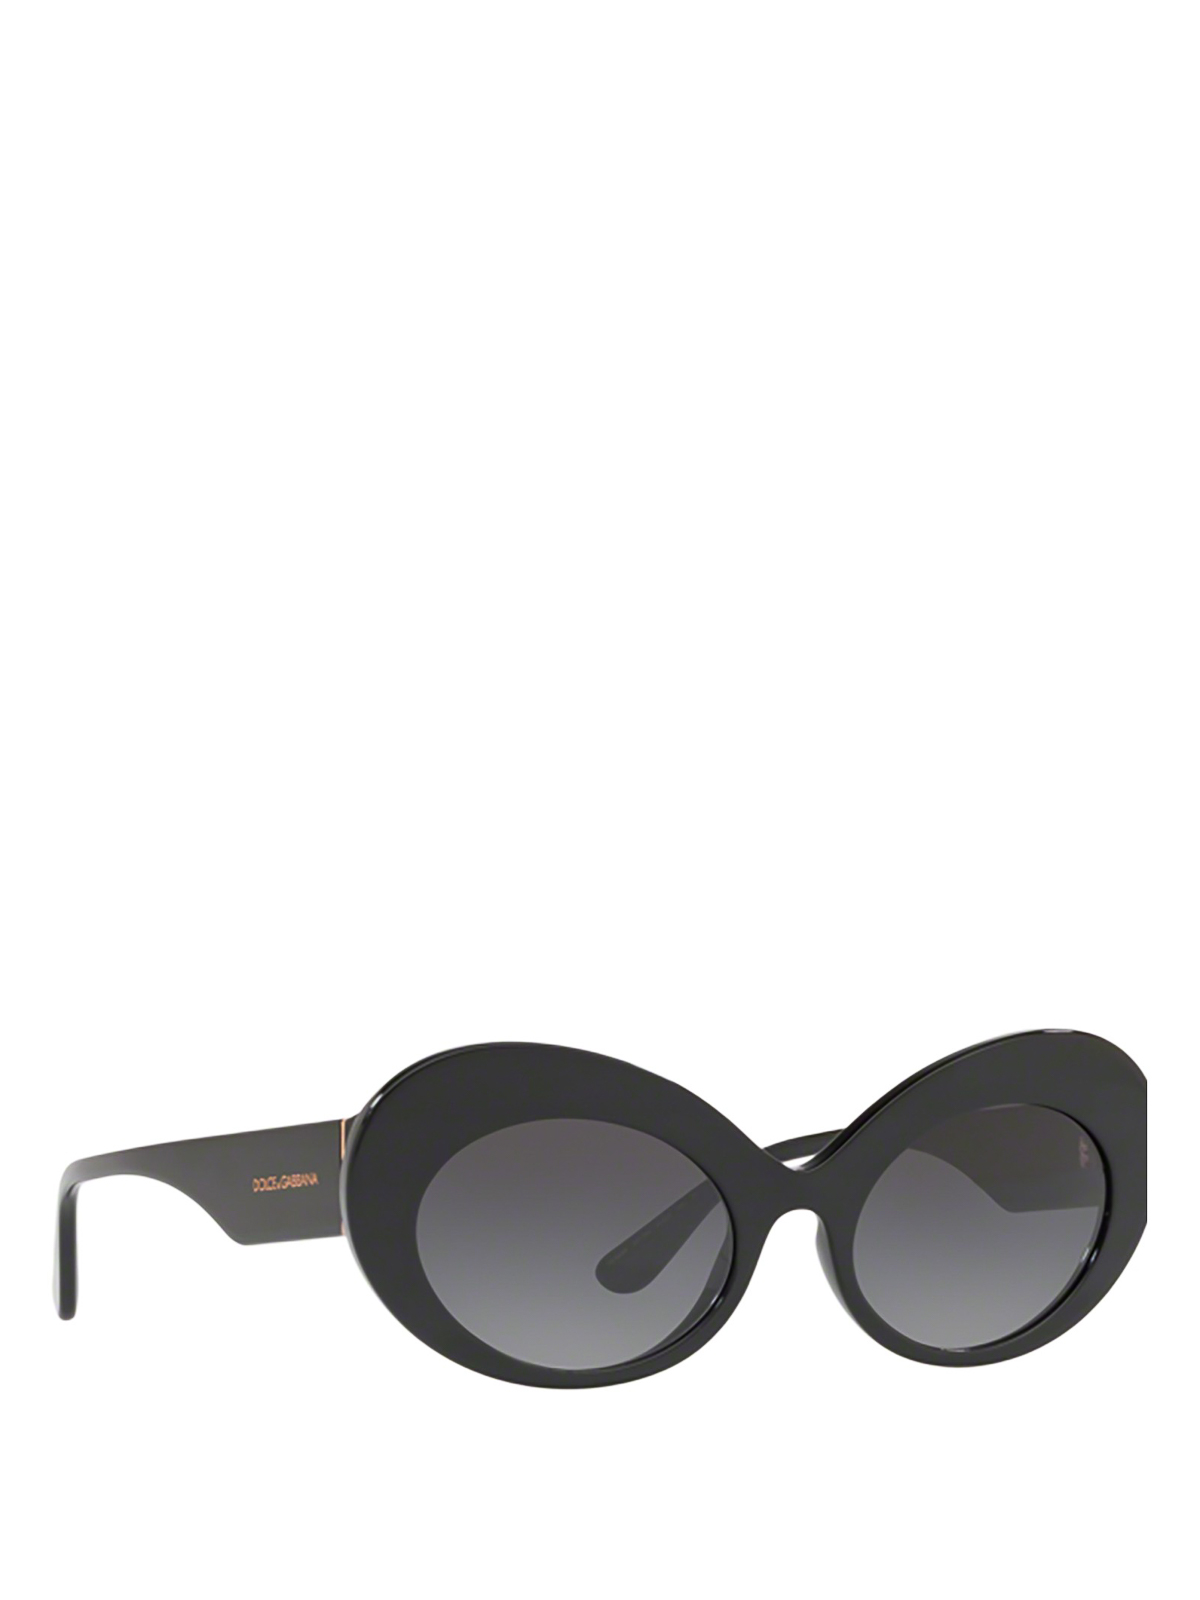 Sunglasses Dolce & Gabbana - Black acetate oval sunglasses - DG43455018G